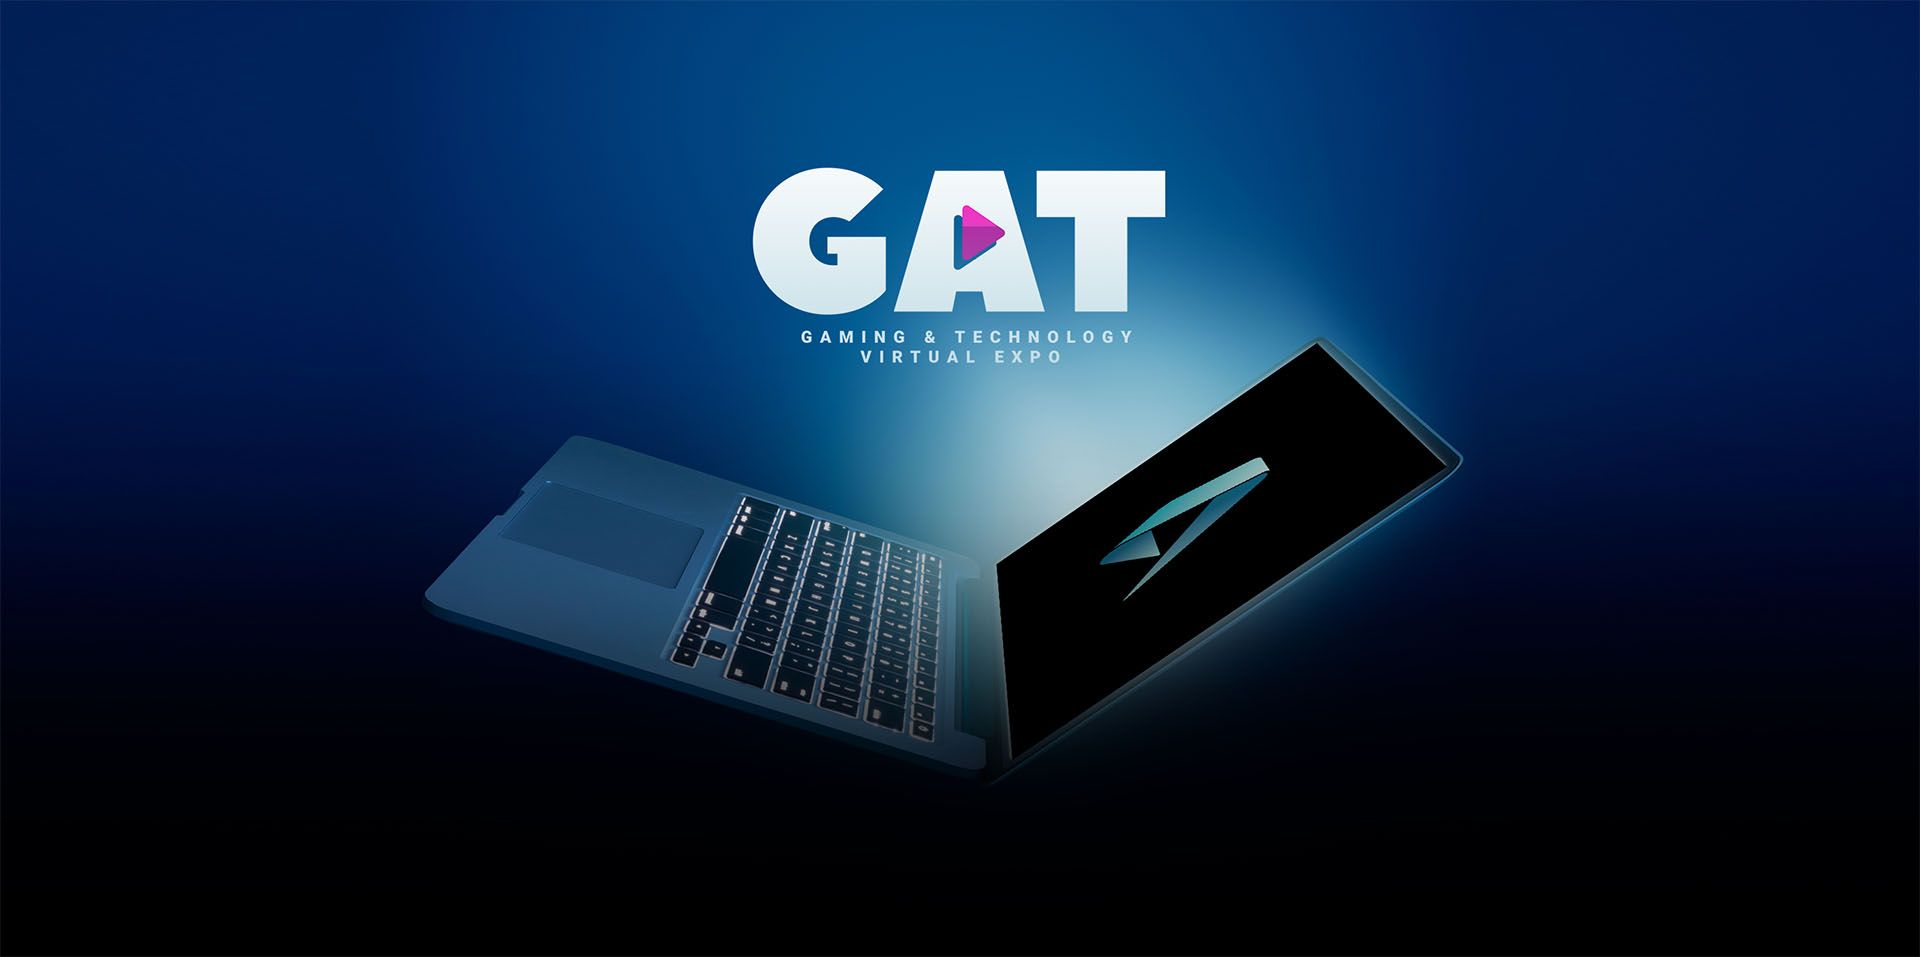 Altenar's deelname aan GAT Virtual Expo
3